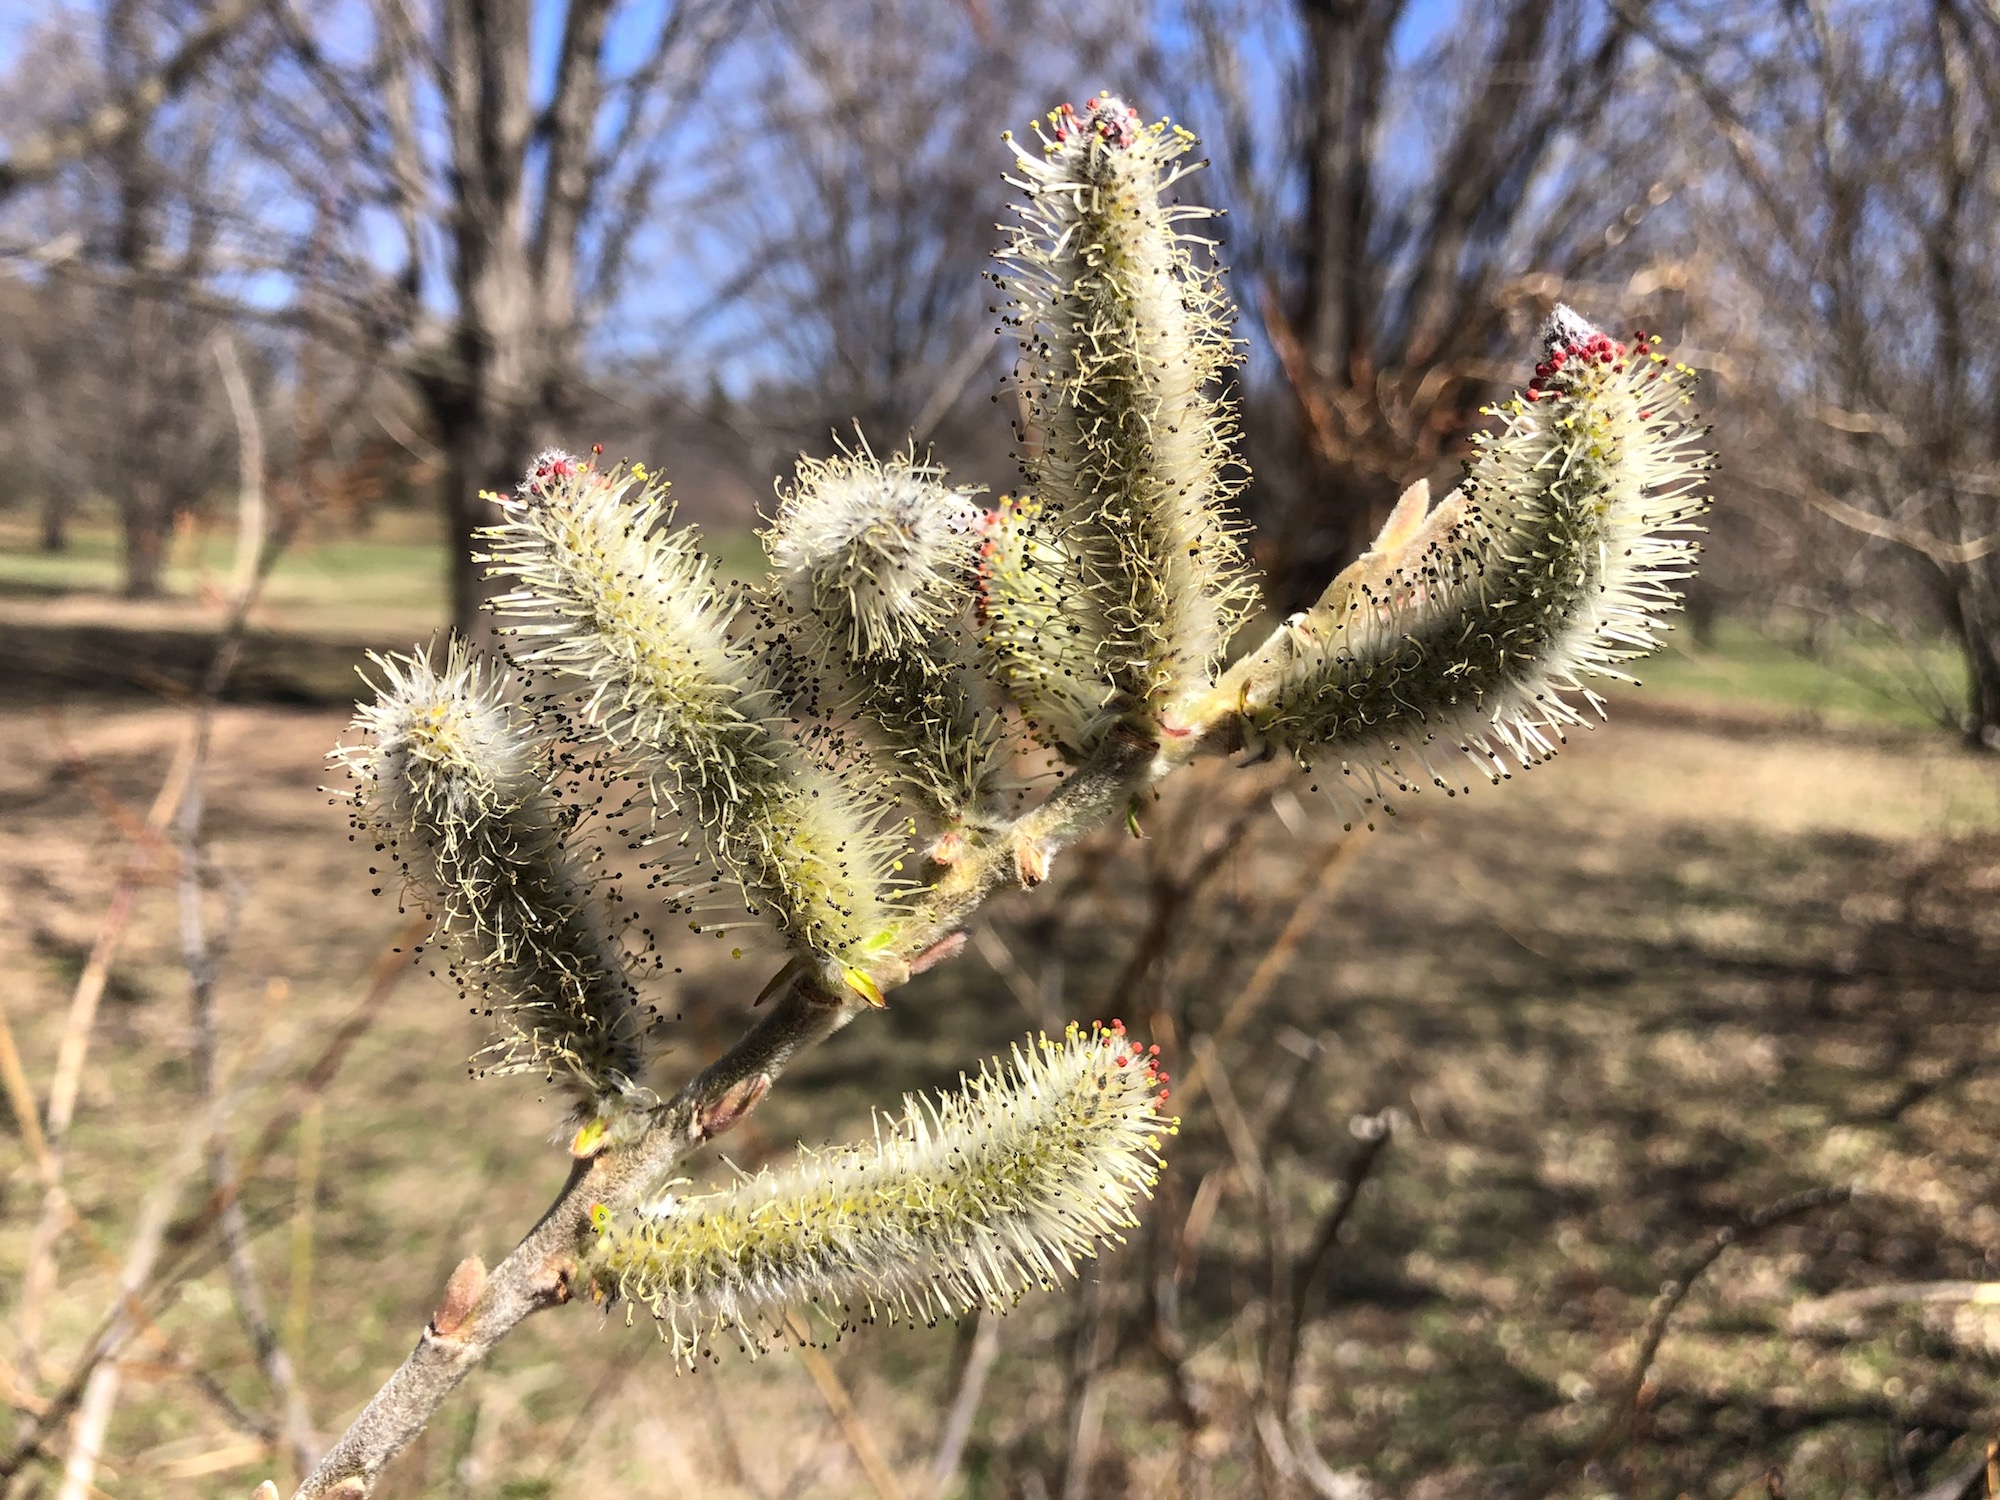 Rose-Gold Pussy Willow in UW-Madison Arboretumm on April 1, 2021.